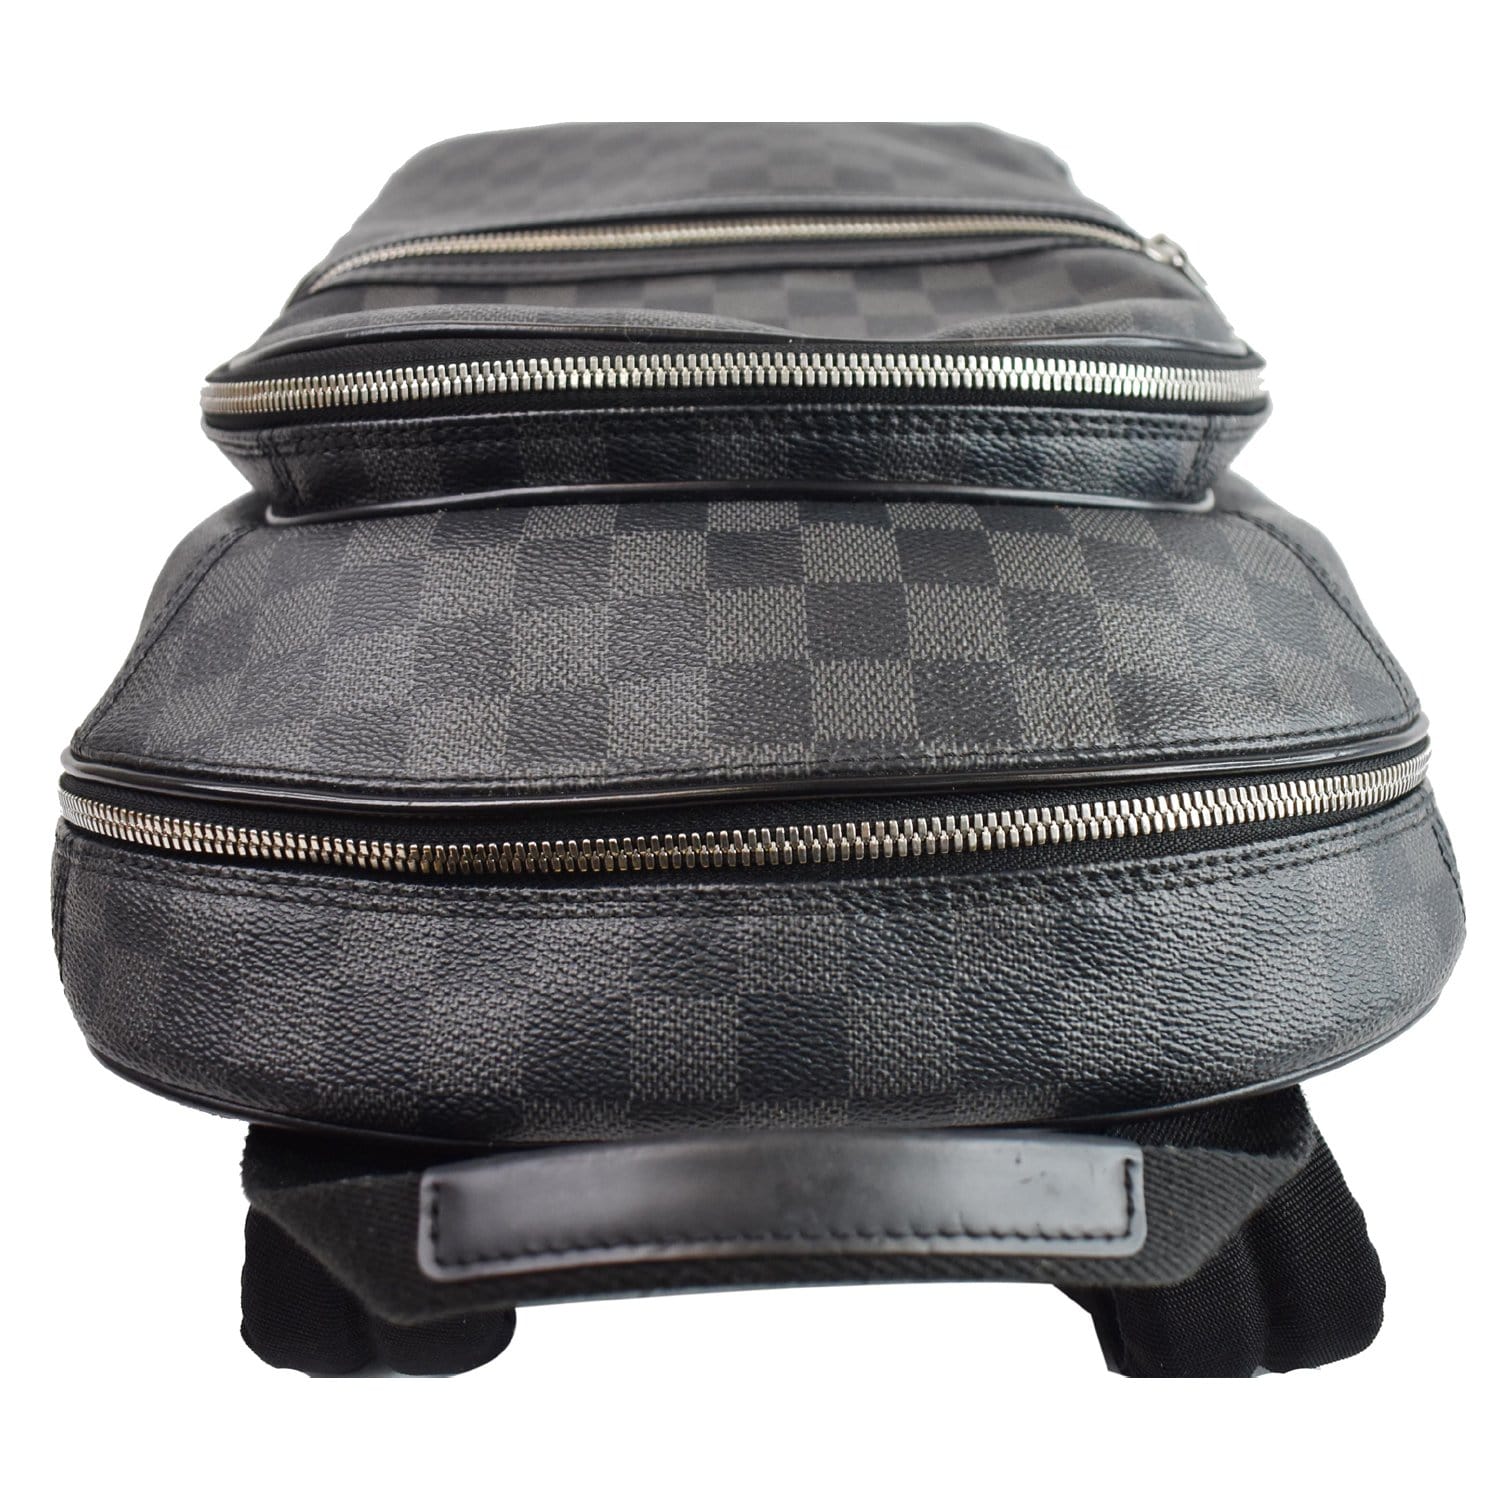 Louis Vuitton Damier Graphite Michael Backpack - Black Backpacks, Bags -  LOU786745